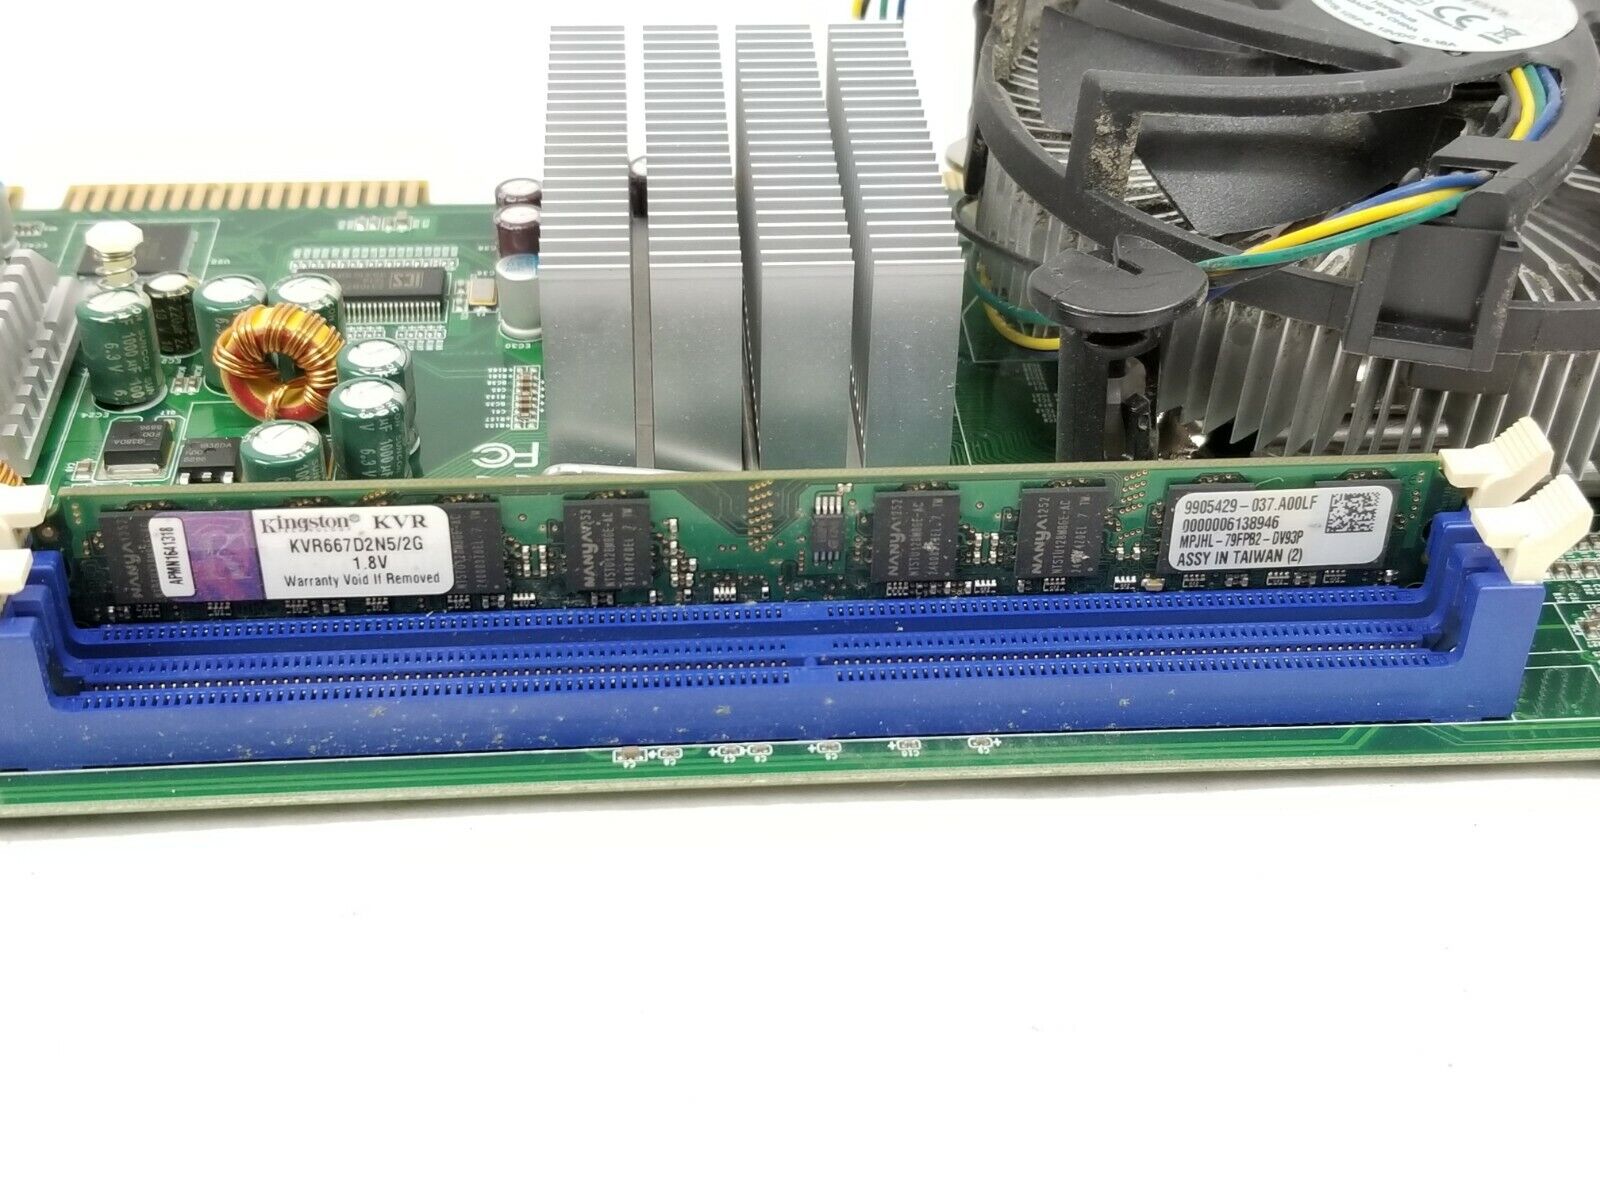 MEON FSB-945GC Intel Pentium E5700 3.00GHz 2GB RAM Industrial Mainboard